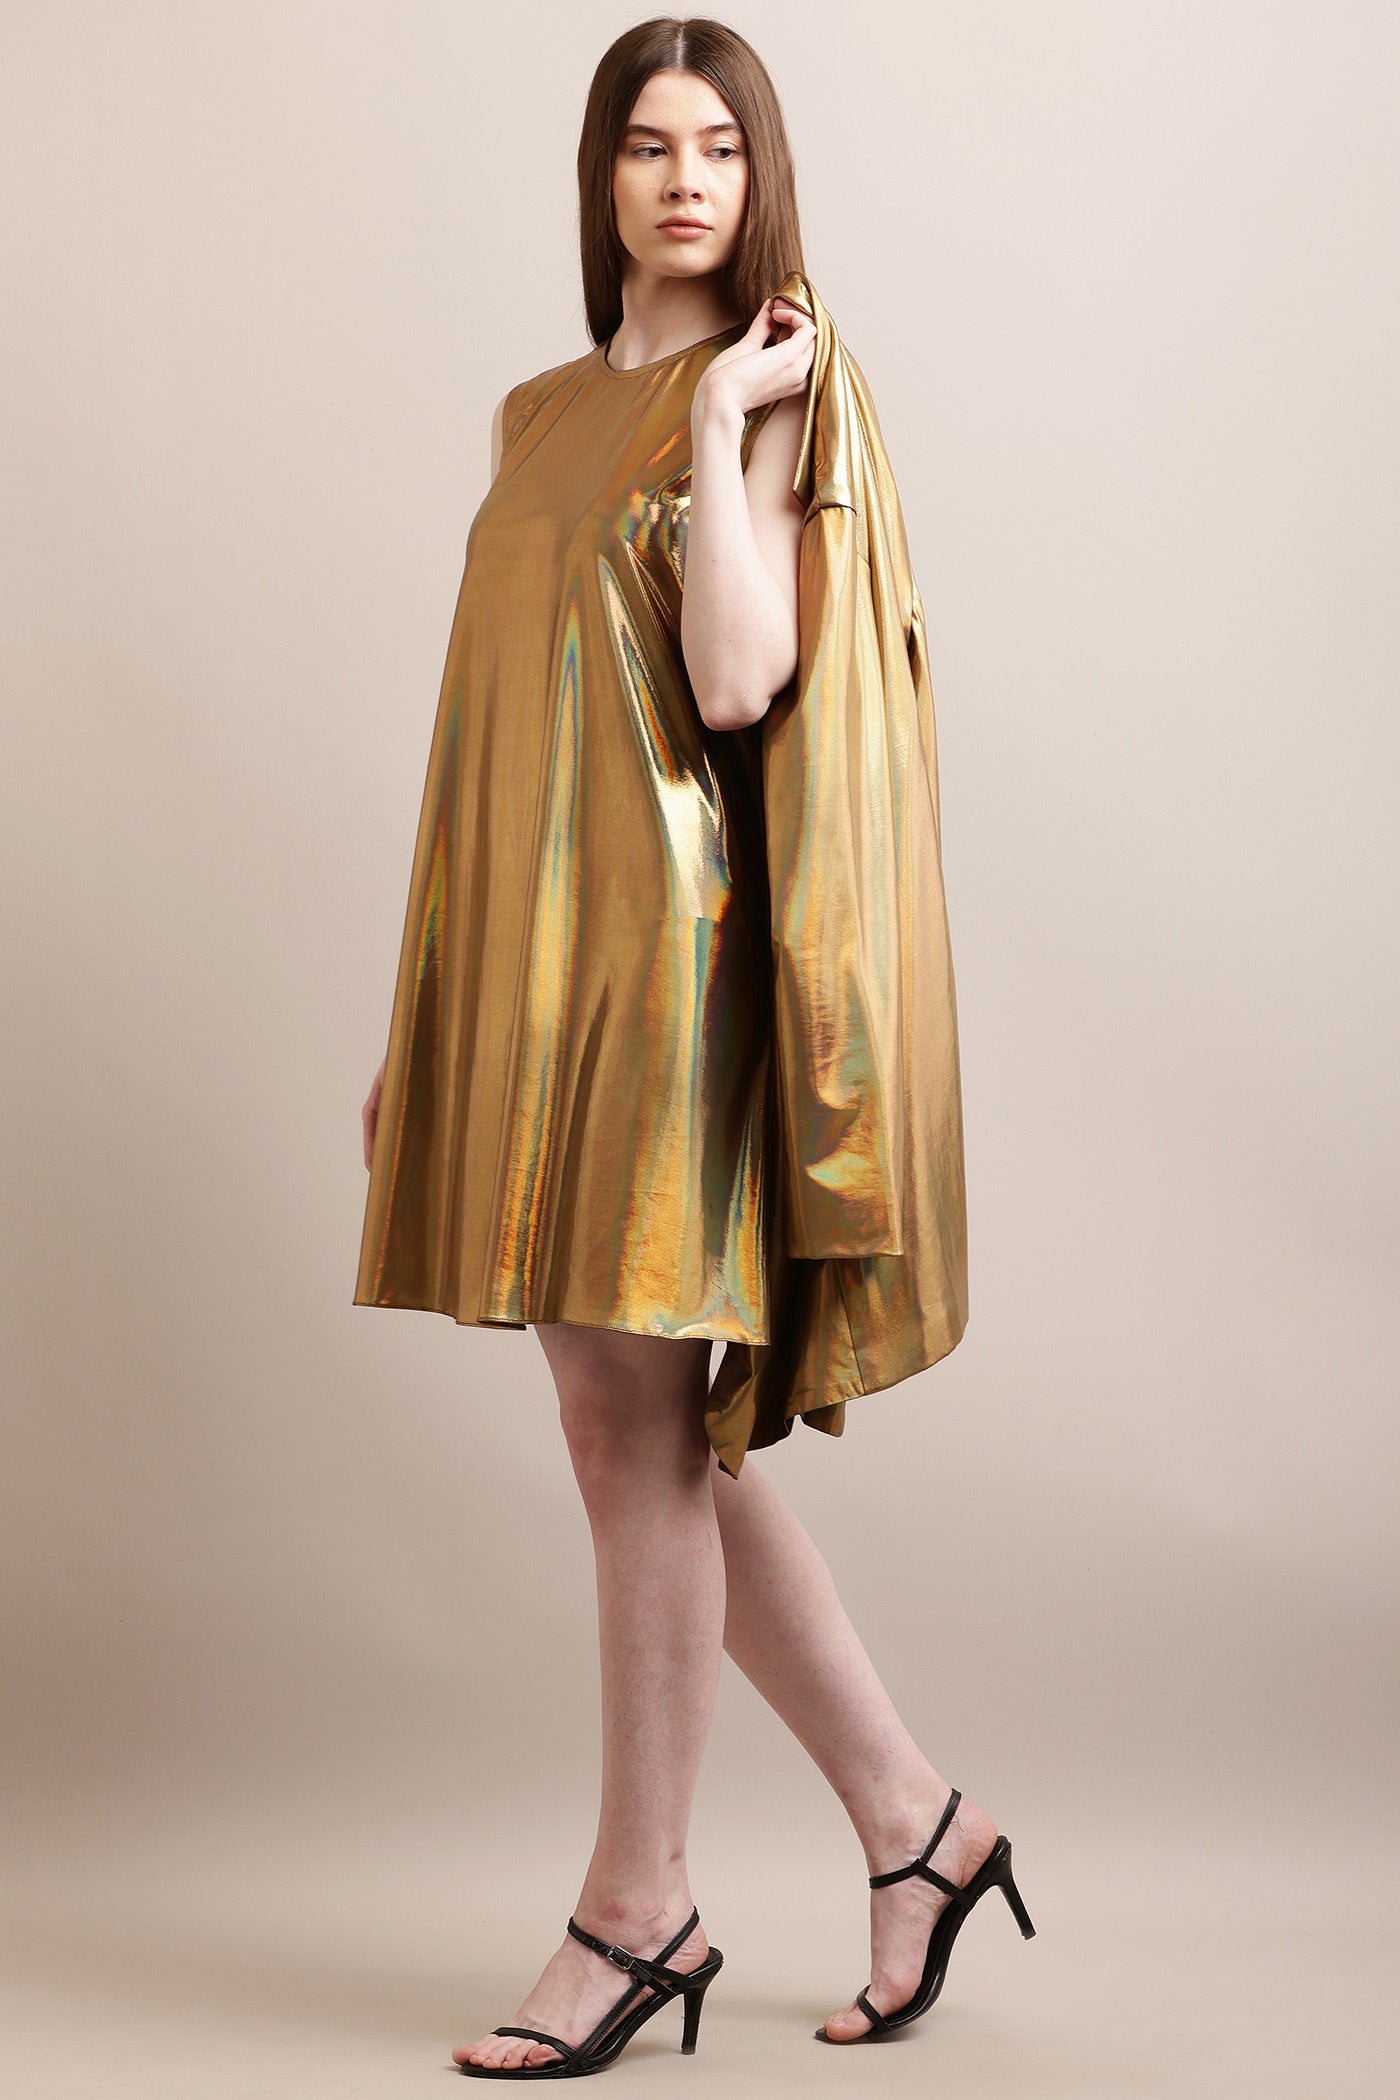 Dark Golden Metalic Blazer & Dress